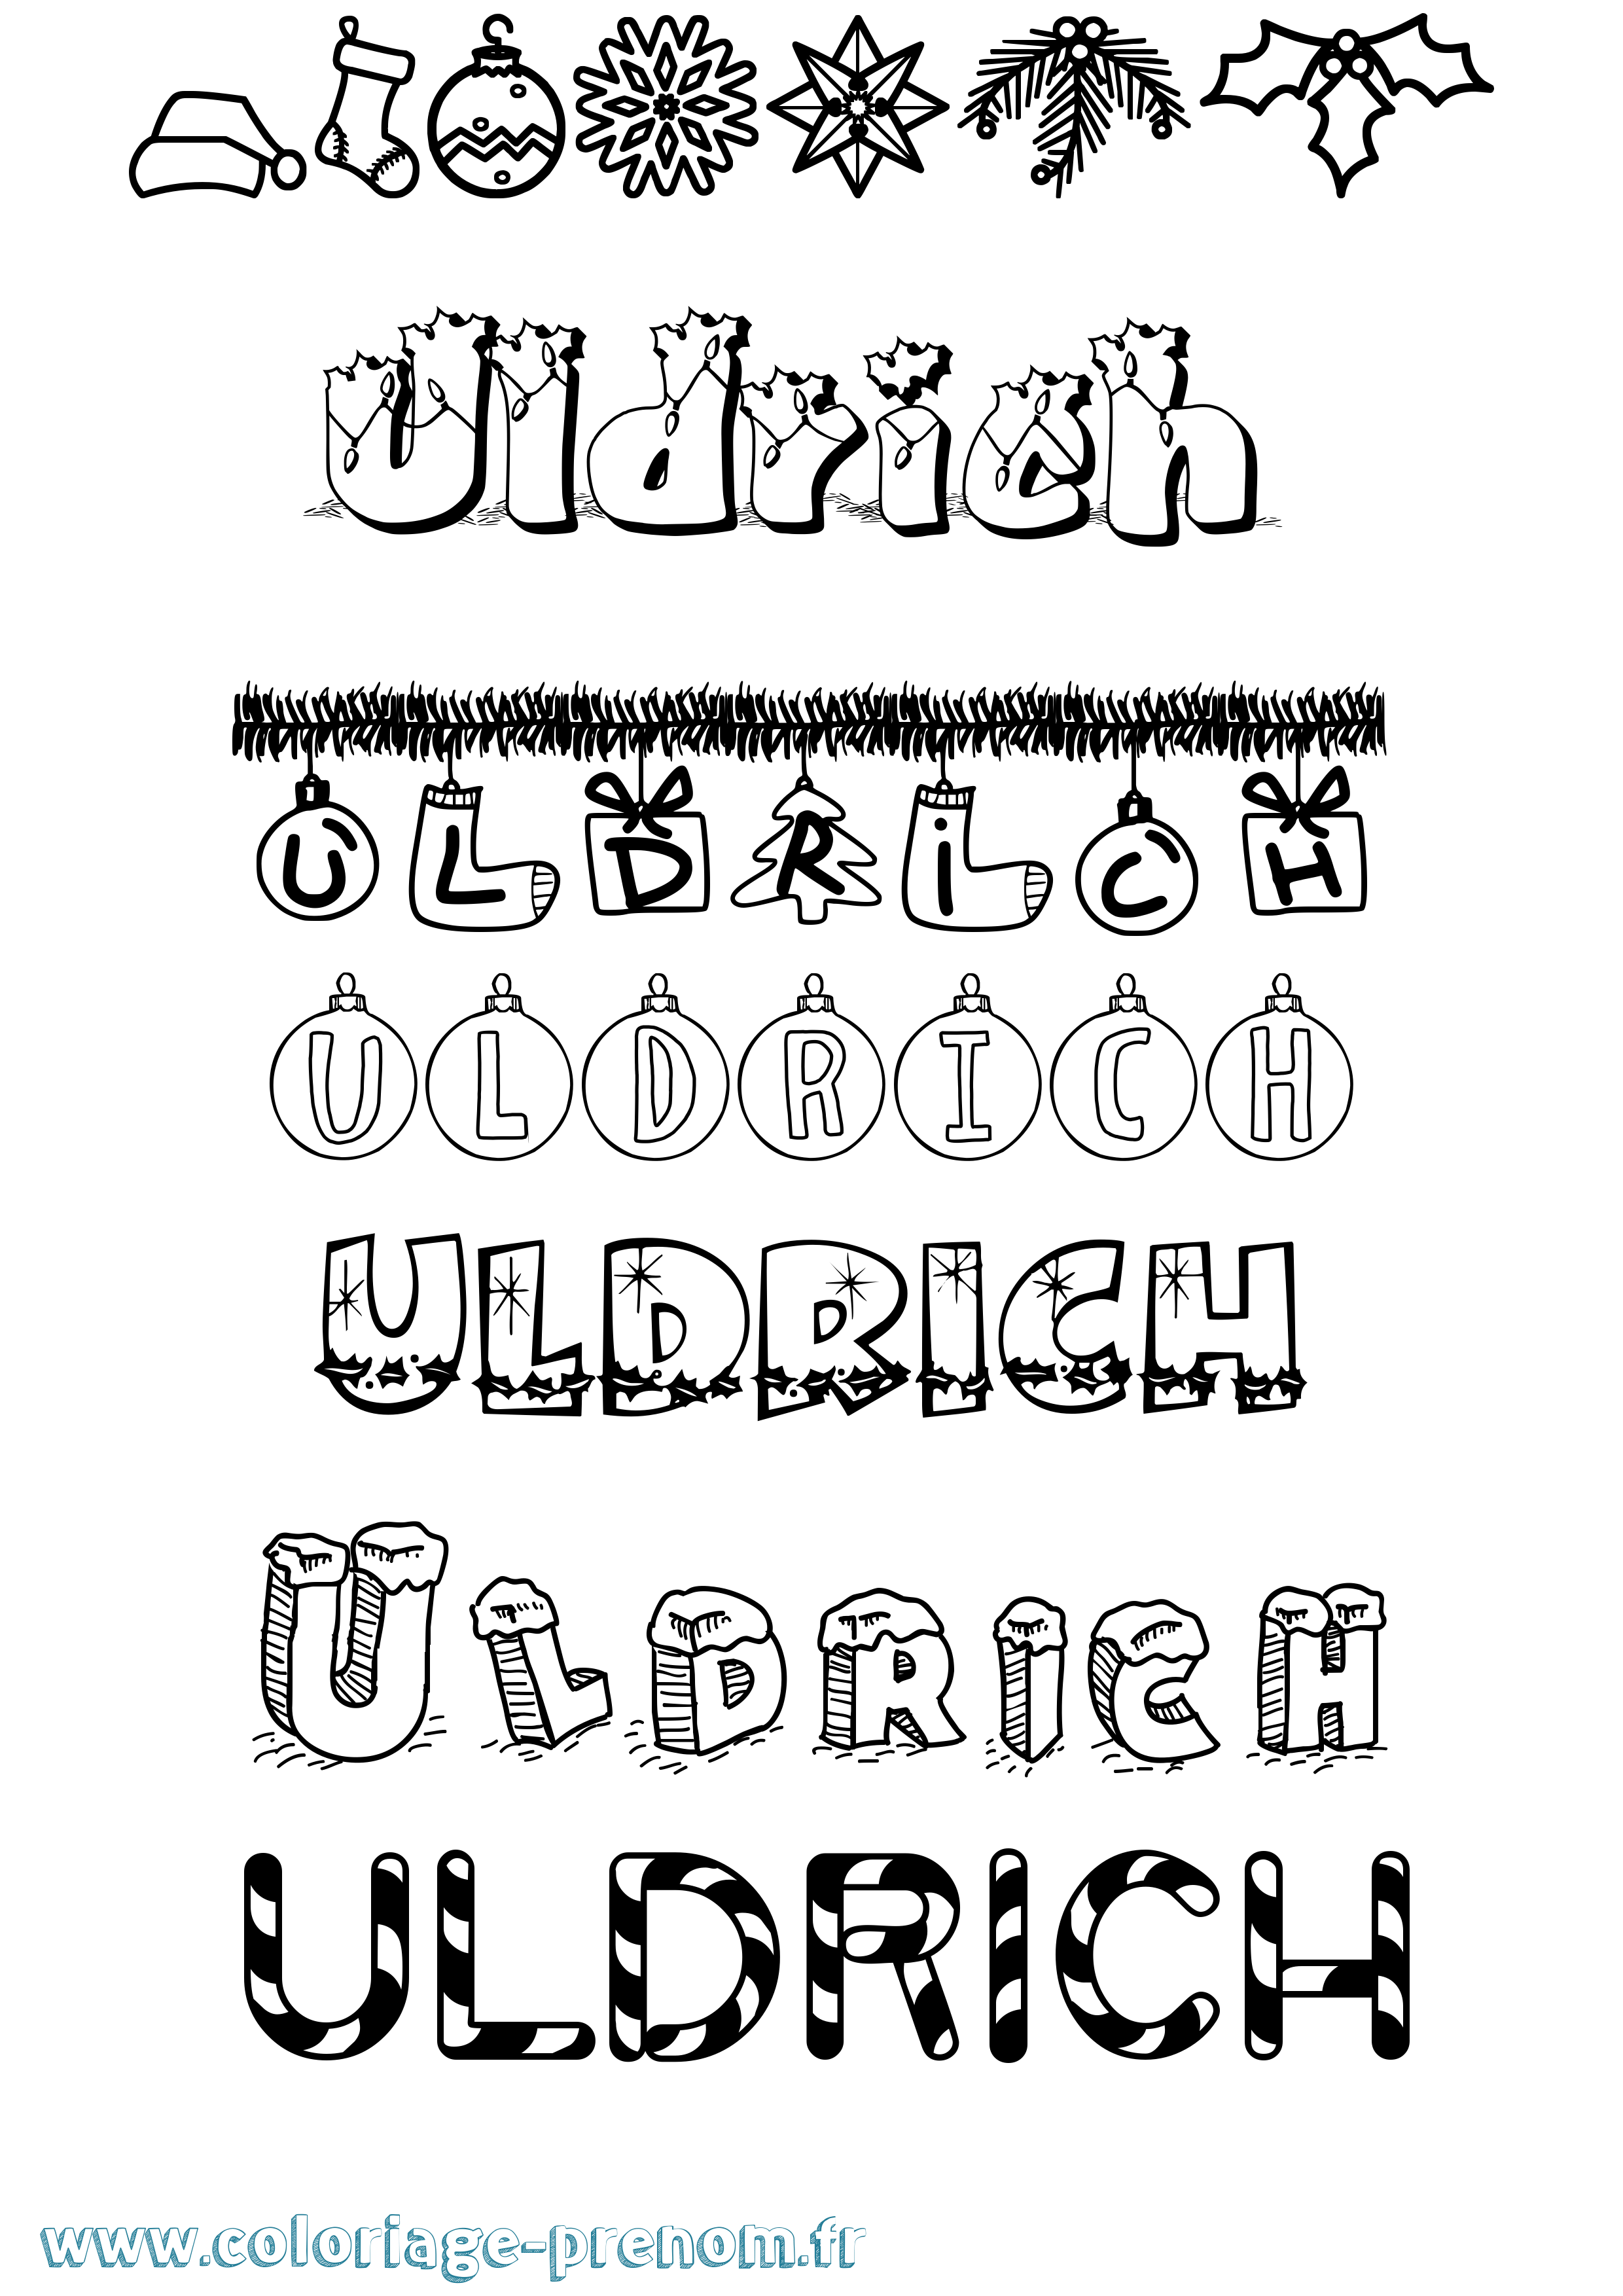 Coloriage prénom Uldrich Noël